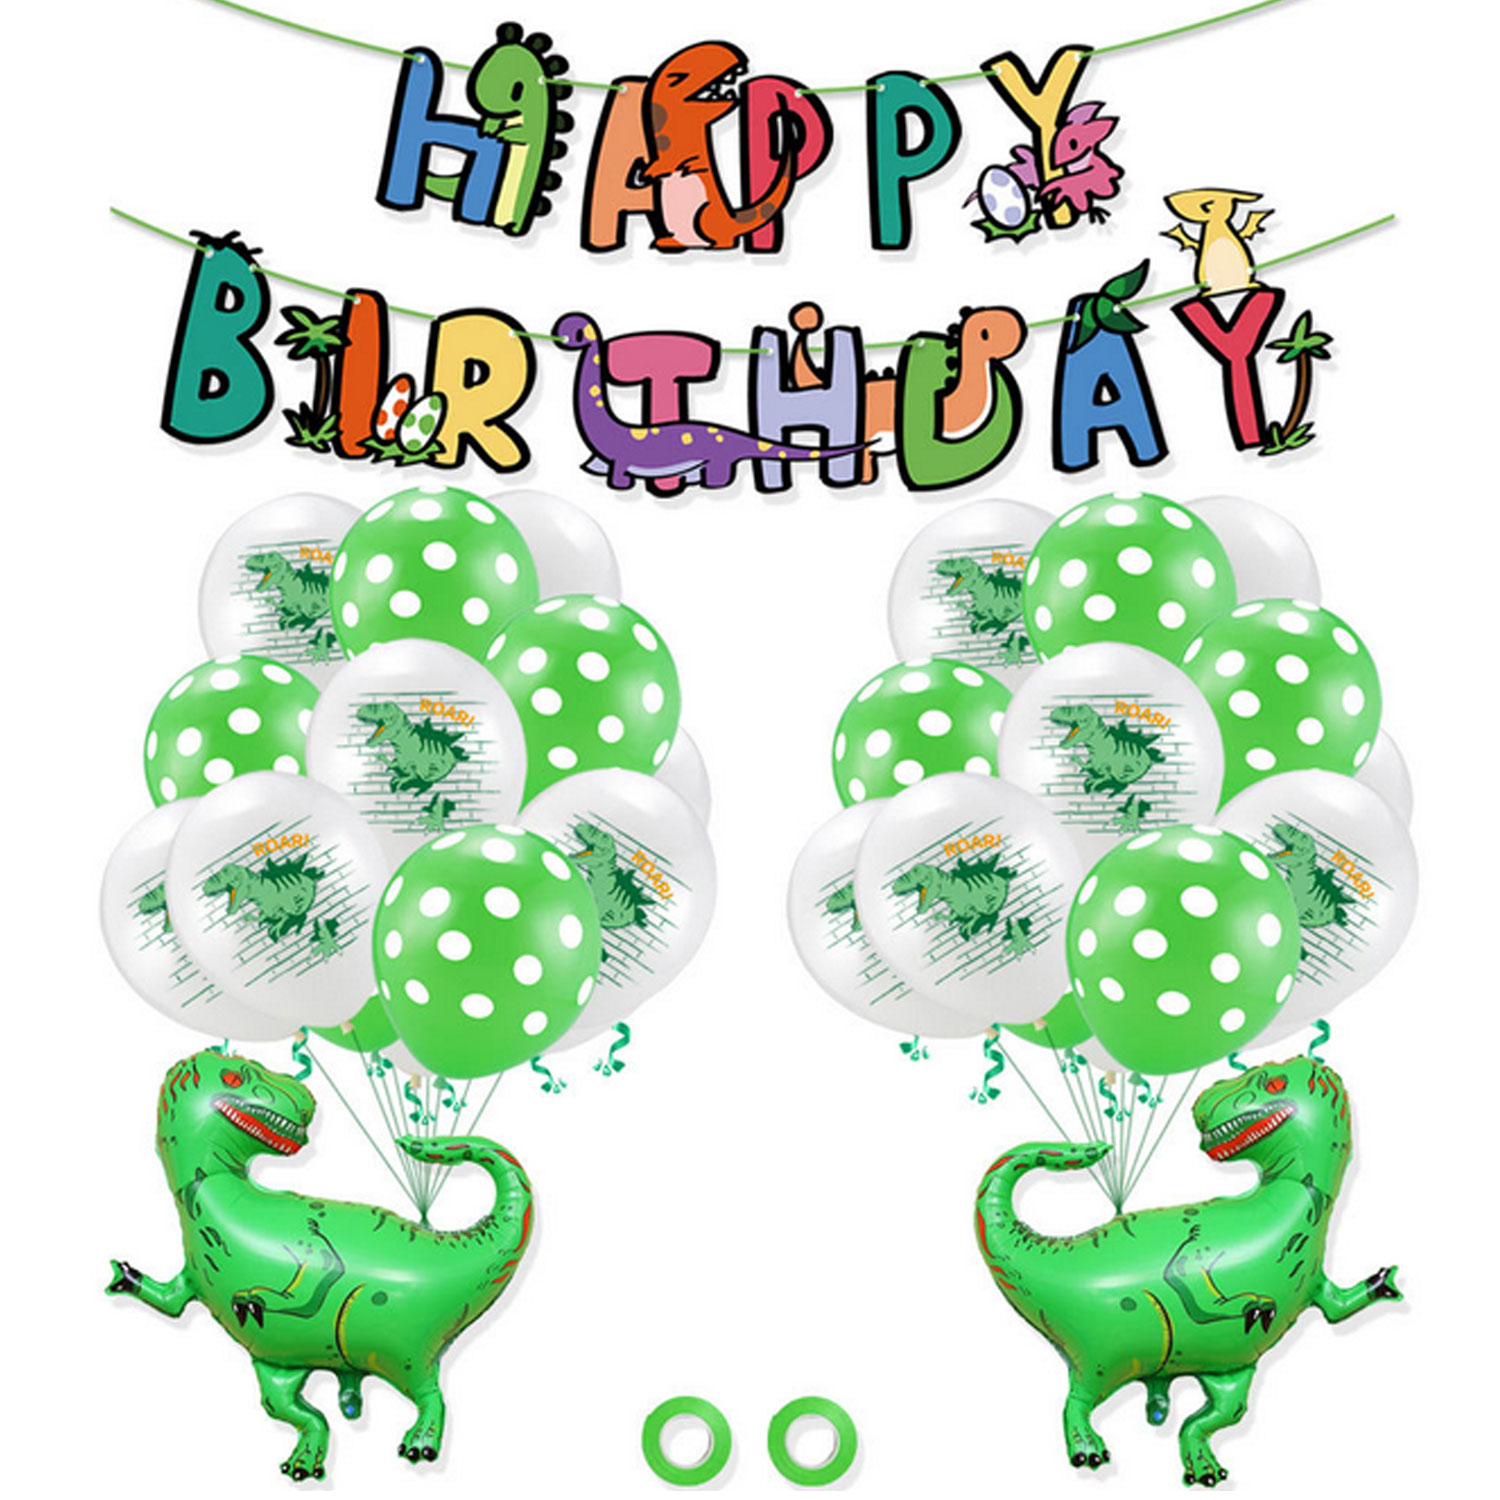 25 stk dinosaur festartikler sæt med tillykke med fødselsdagen banner 2 folie ballon 20 latex balloner 2 bånd til børn fest dekoration